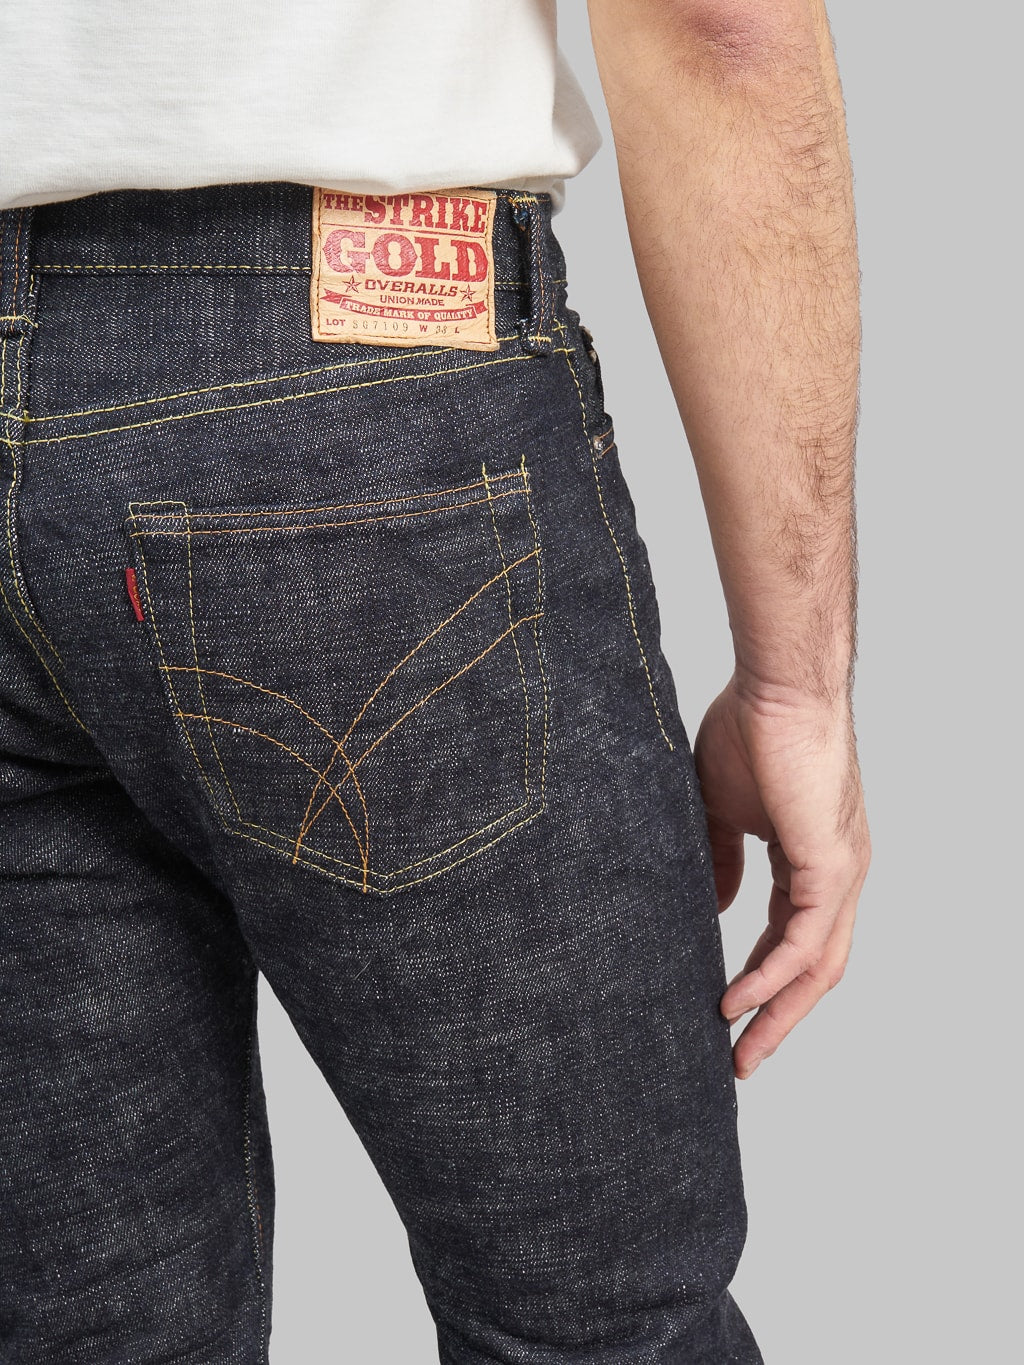 The Strike Gold 7109 Ultra Slubby Slim Tapered Jeans back details